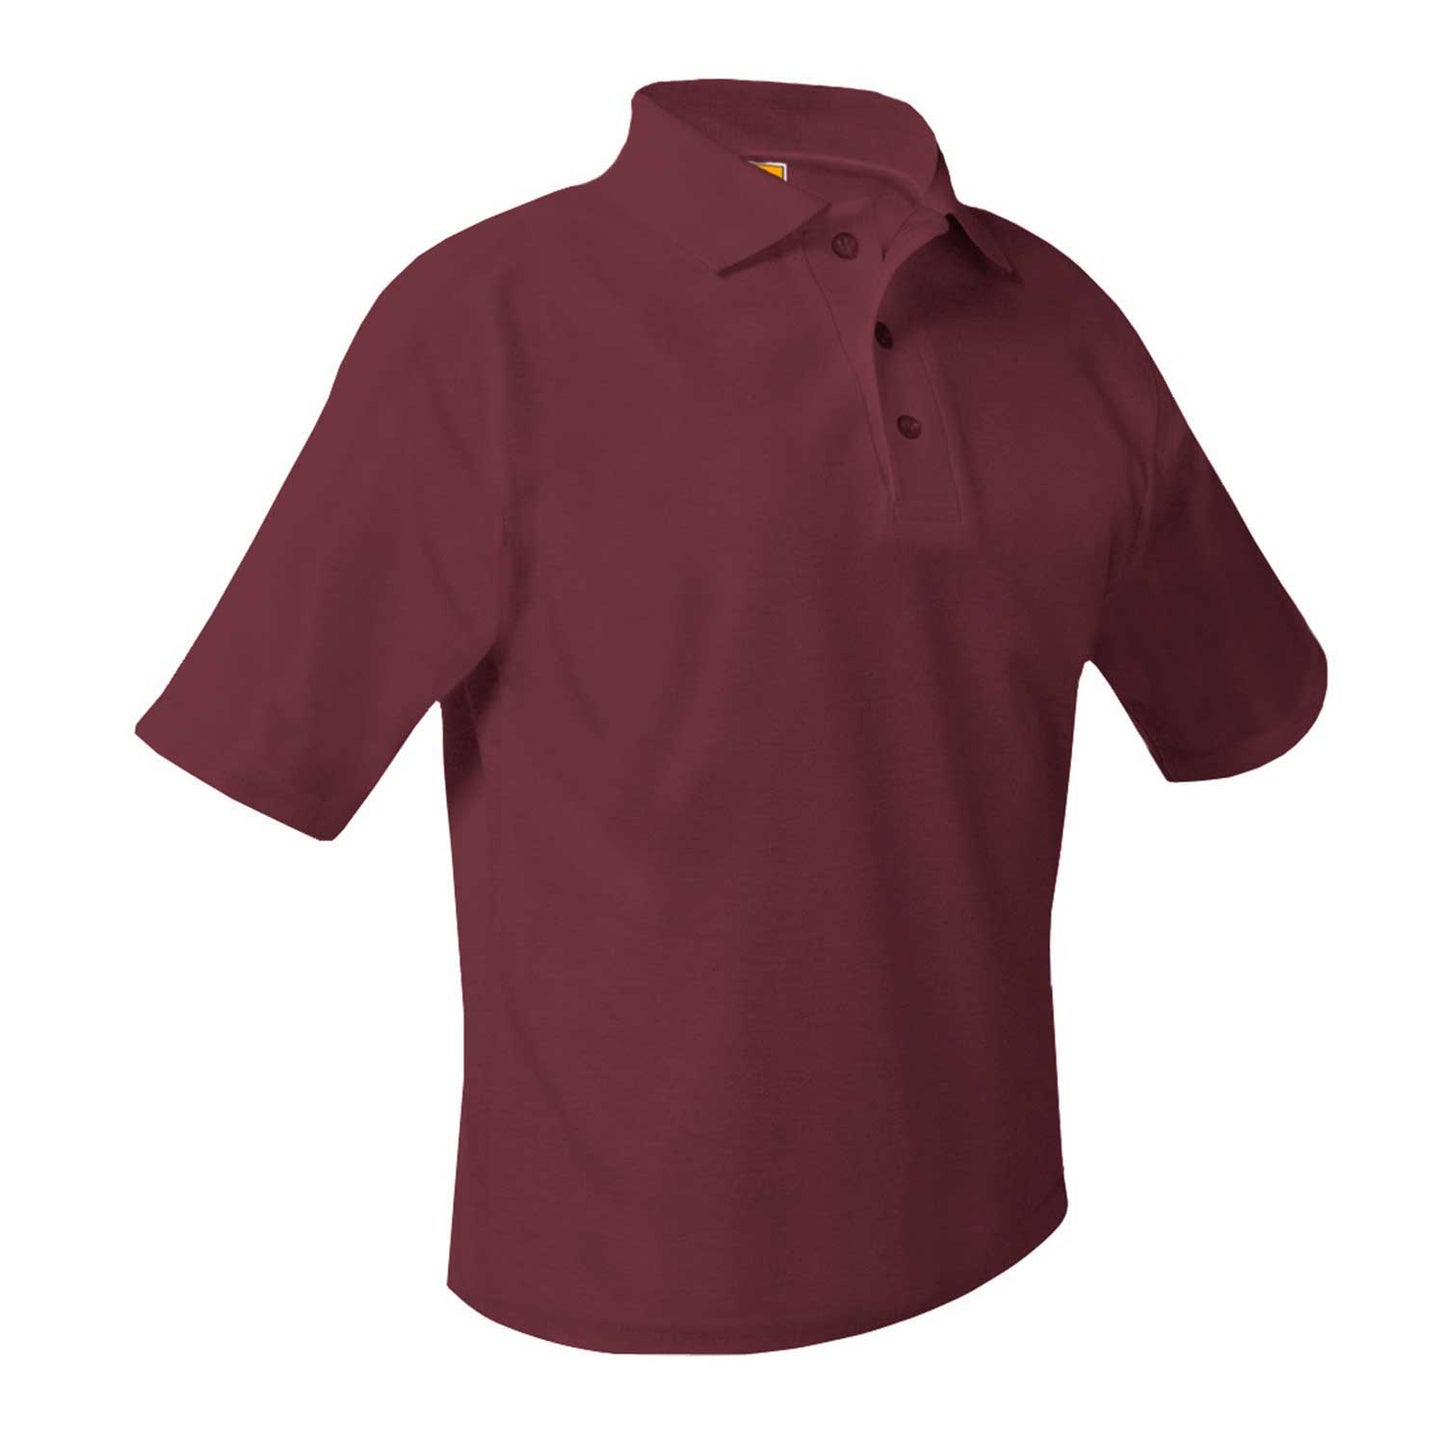 Unisex Pique Polo Shirt, Short Sleeves, Hemmed w/Logo - 1105